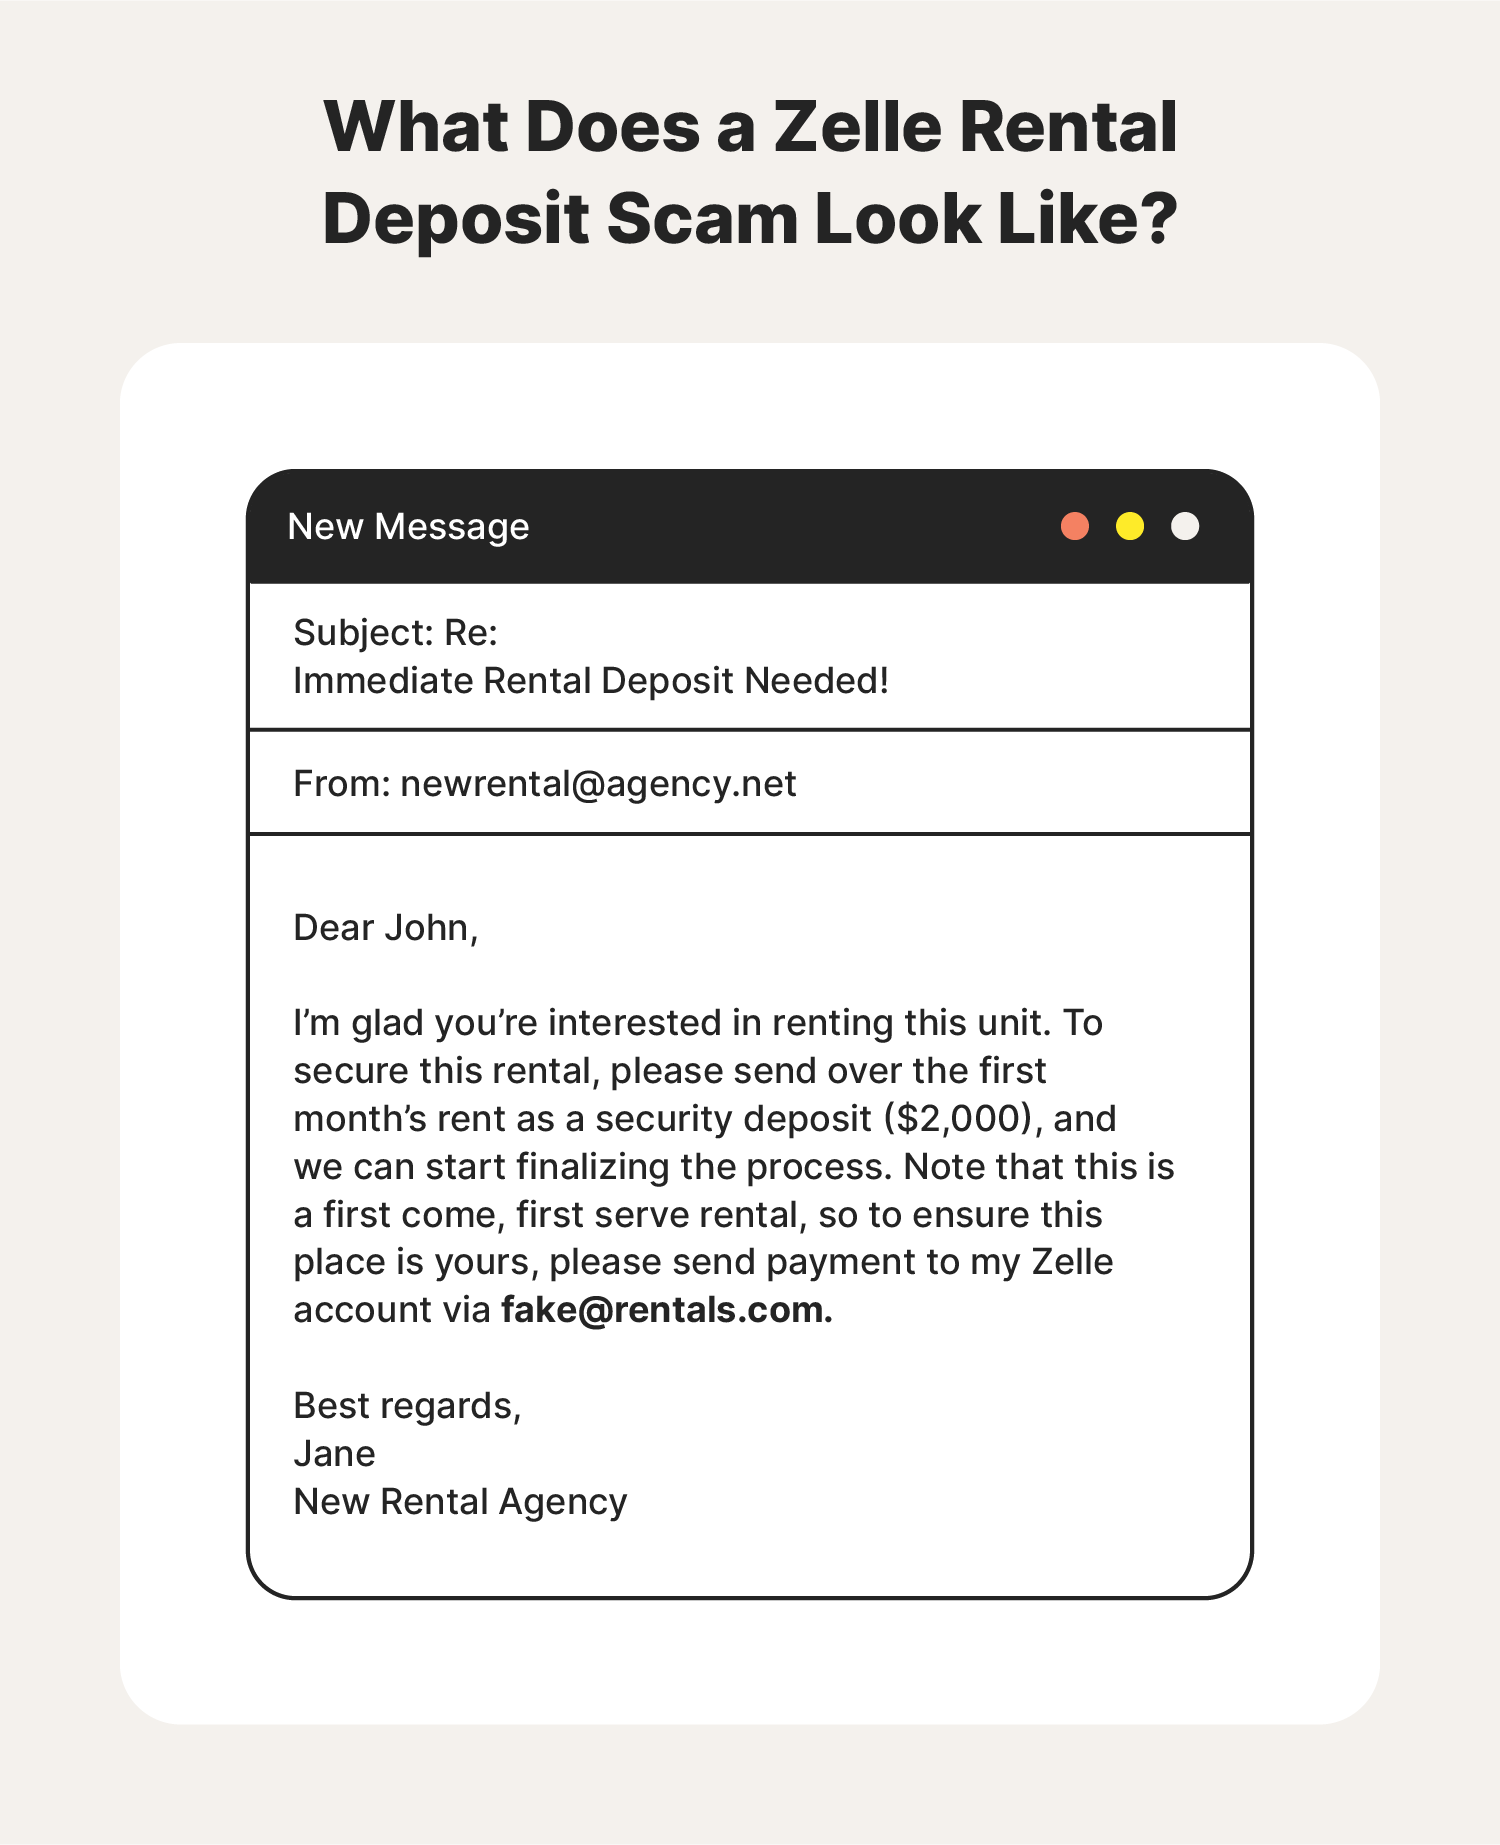 An illustration of a rental deposit scam message screenshot.